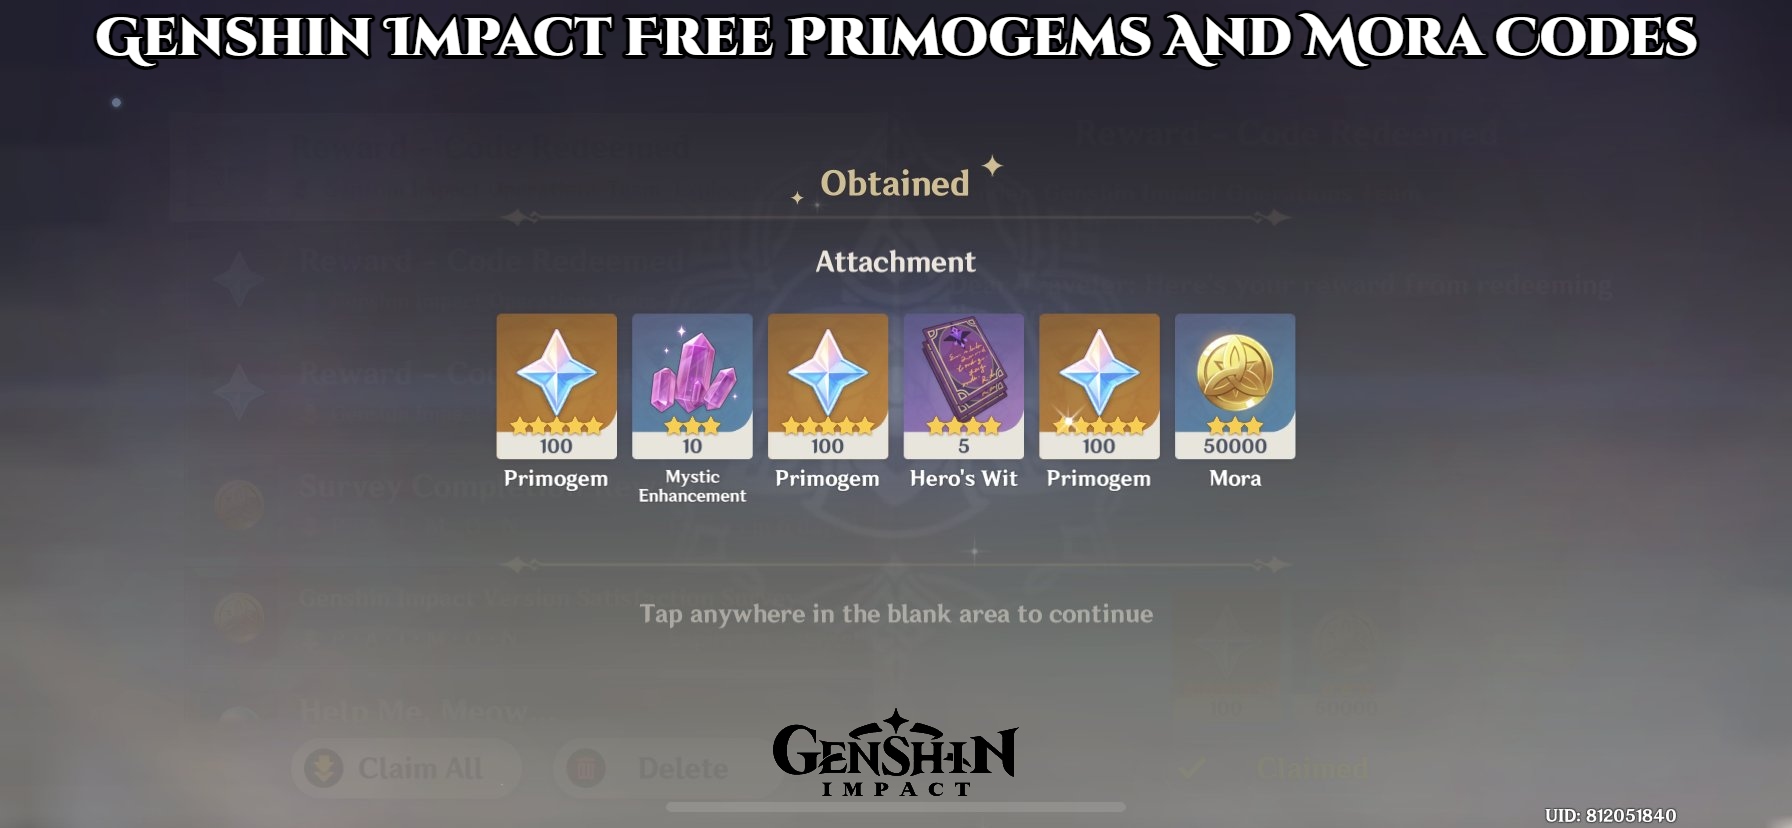 Genshin Impact - Promo Codes Novembro 2021 - Obtém itens e recompensas  grátis